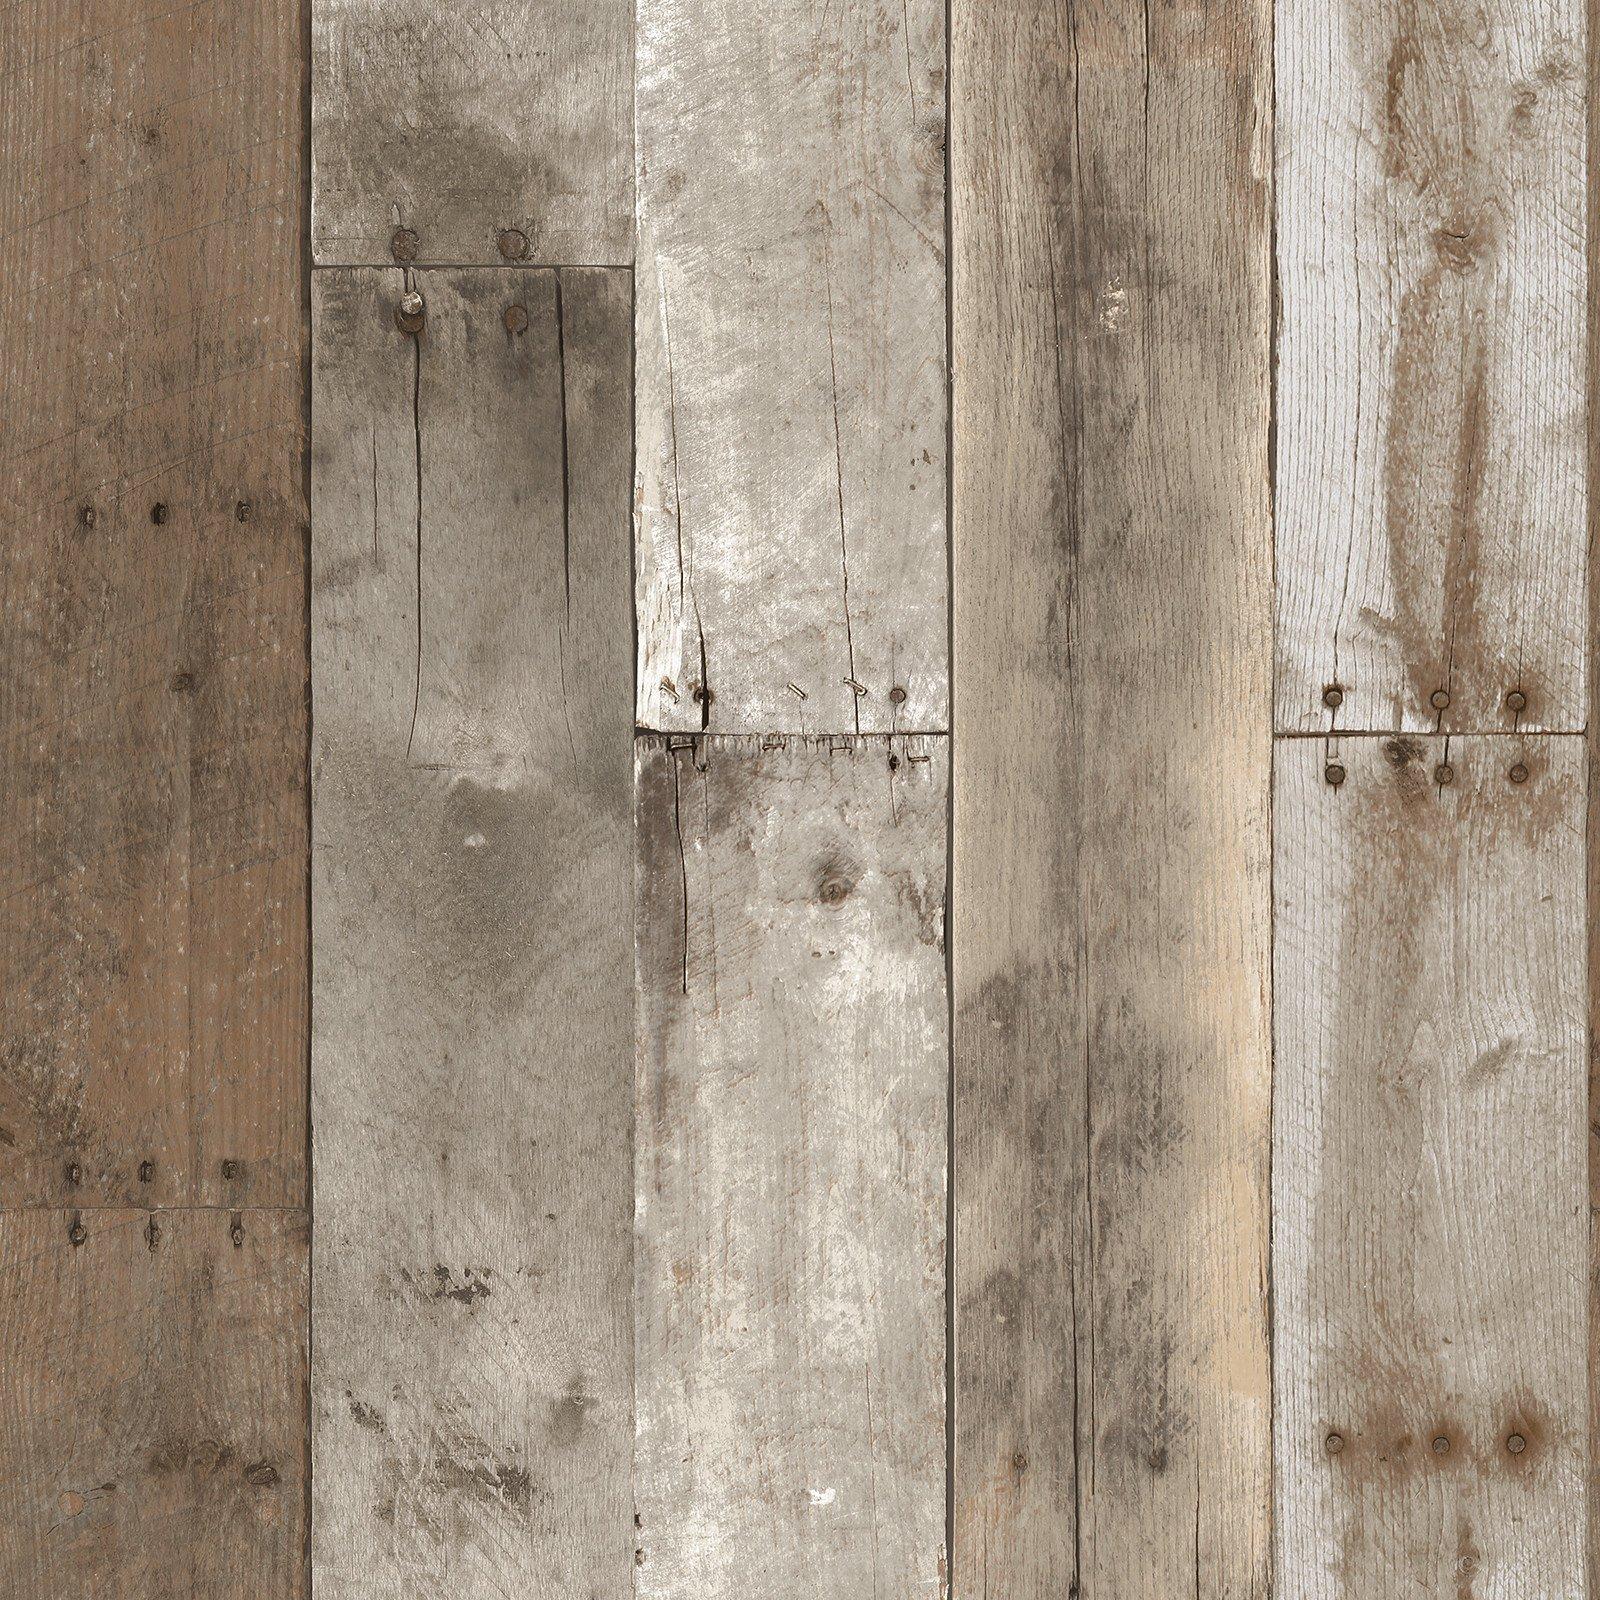 Repurposed Wood Weathered Textured Self Adhesive Wallpaper